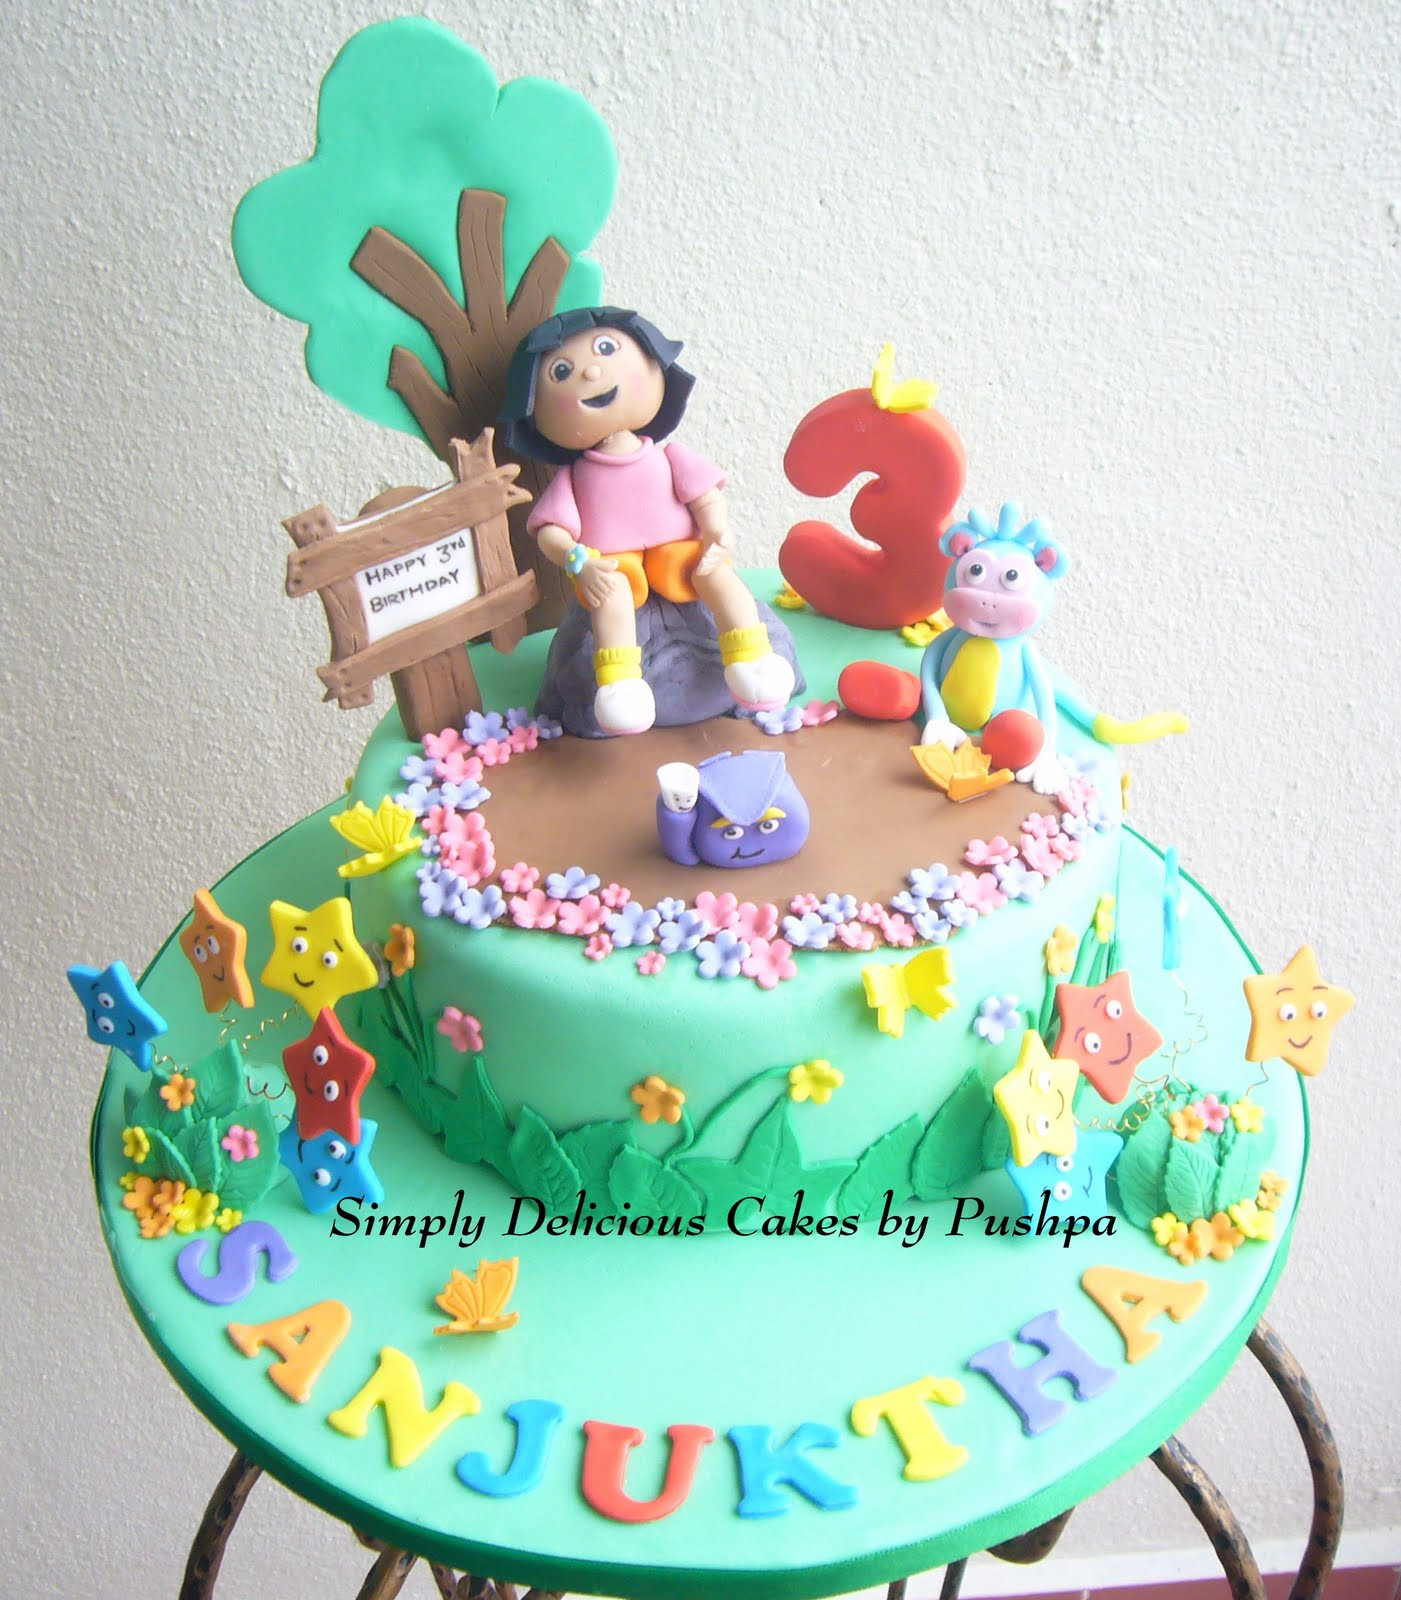 Dora The Explorer Birthday Cakes
 SIMPLY DELICIOUS CAKES Dora the Explorer